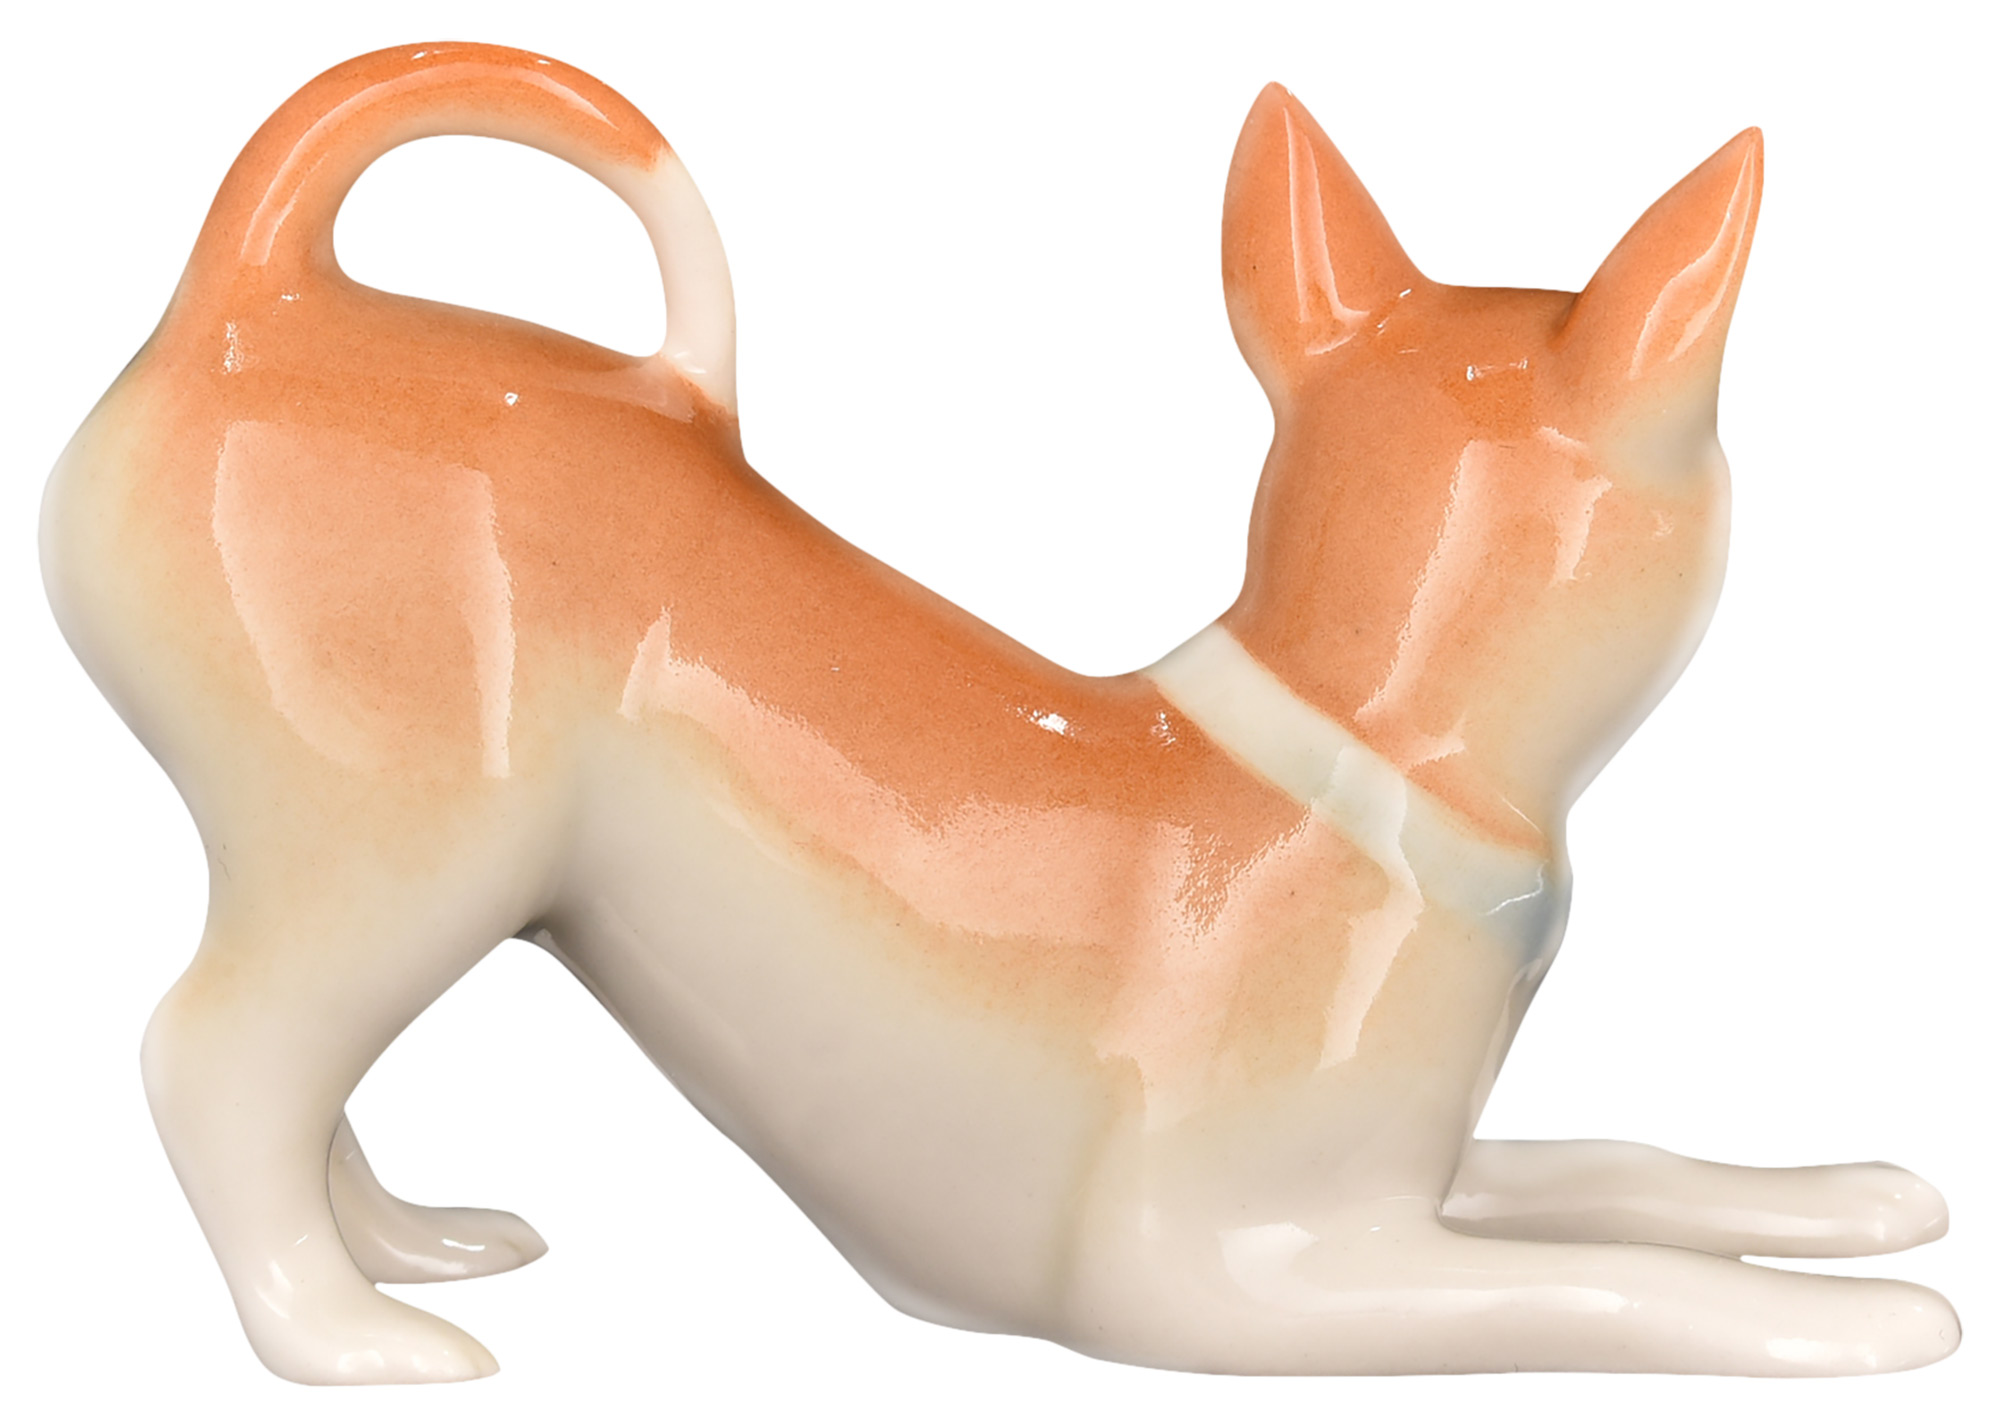 Buy Playing Chihuahua 'Chara' Dog Figurine 2.1"x3.1" at GoldenCockerel.com